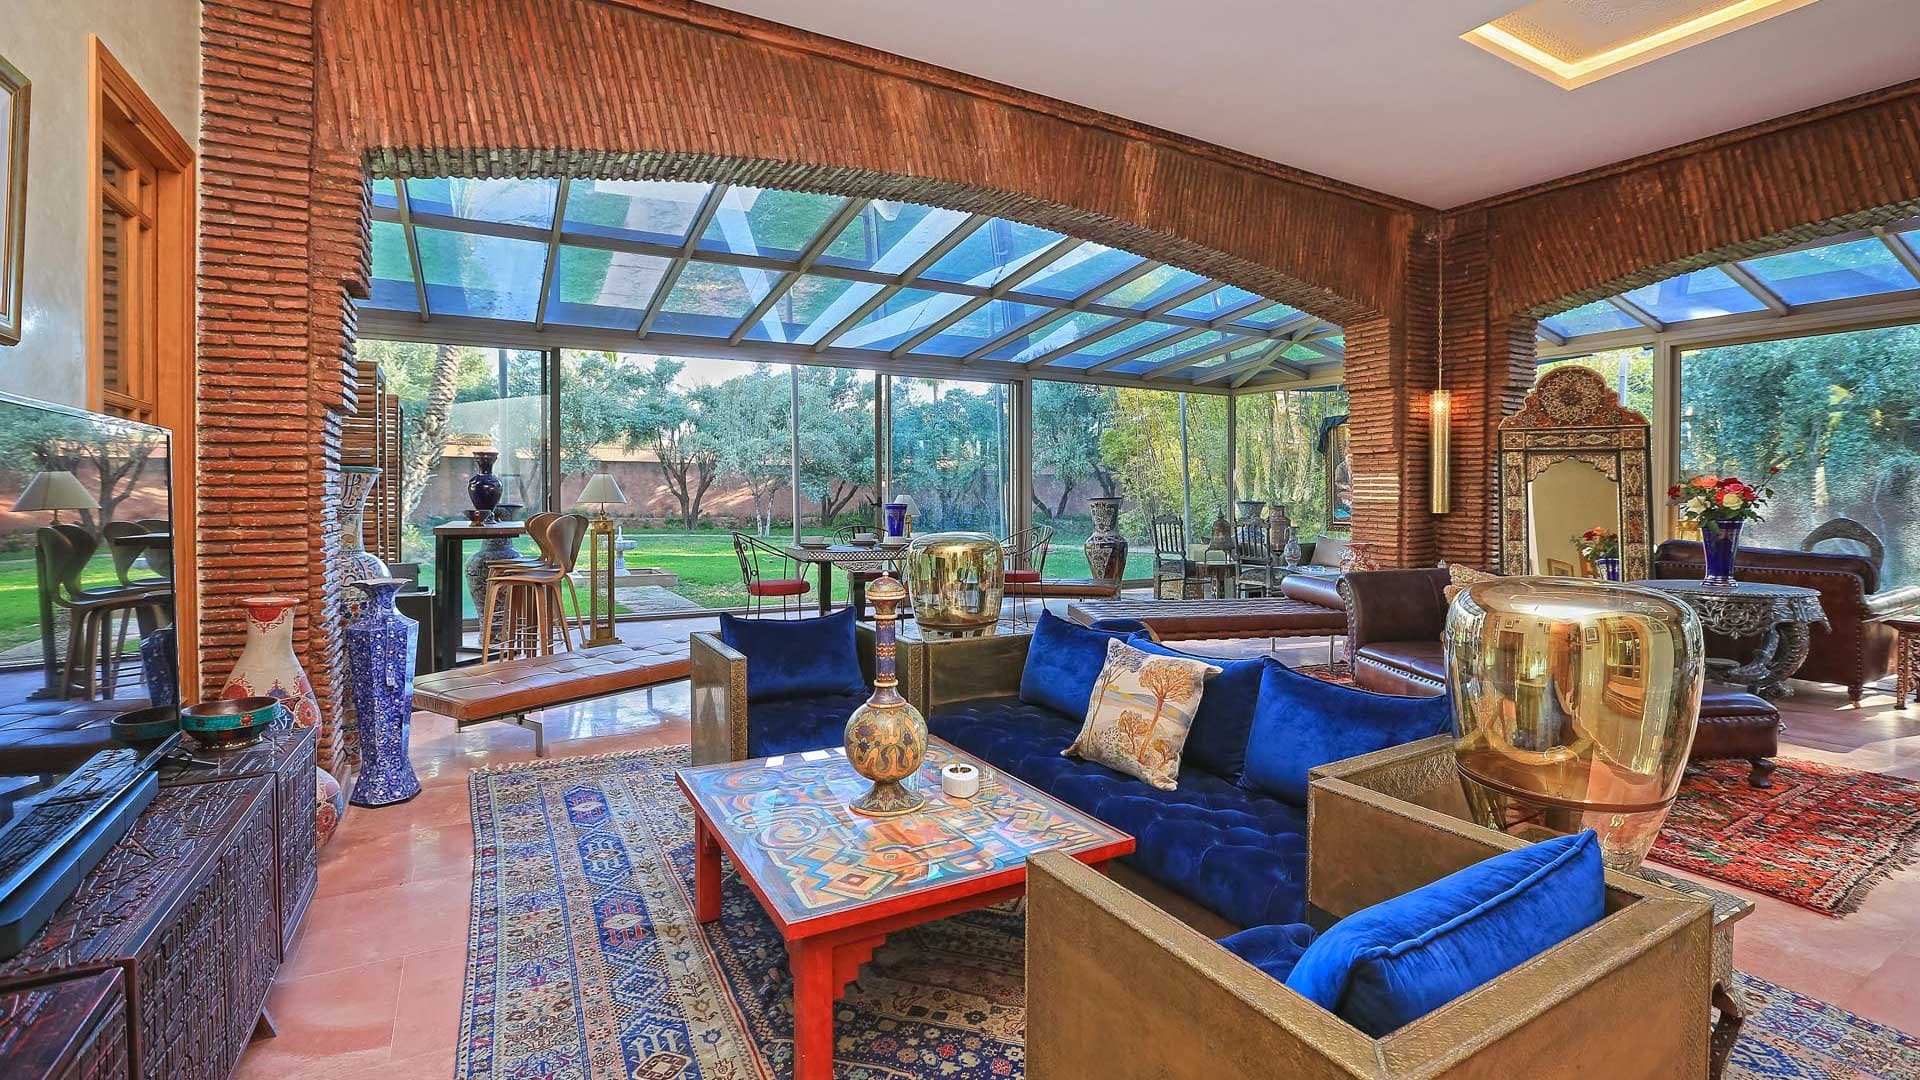 8 Bedroom Villa For Sale Marrakech Lp08726 27dc6cc2e7342400.jpg